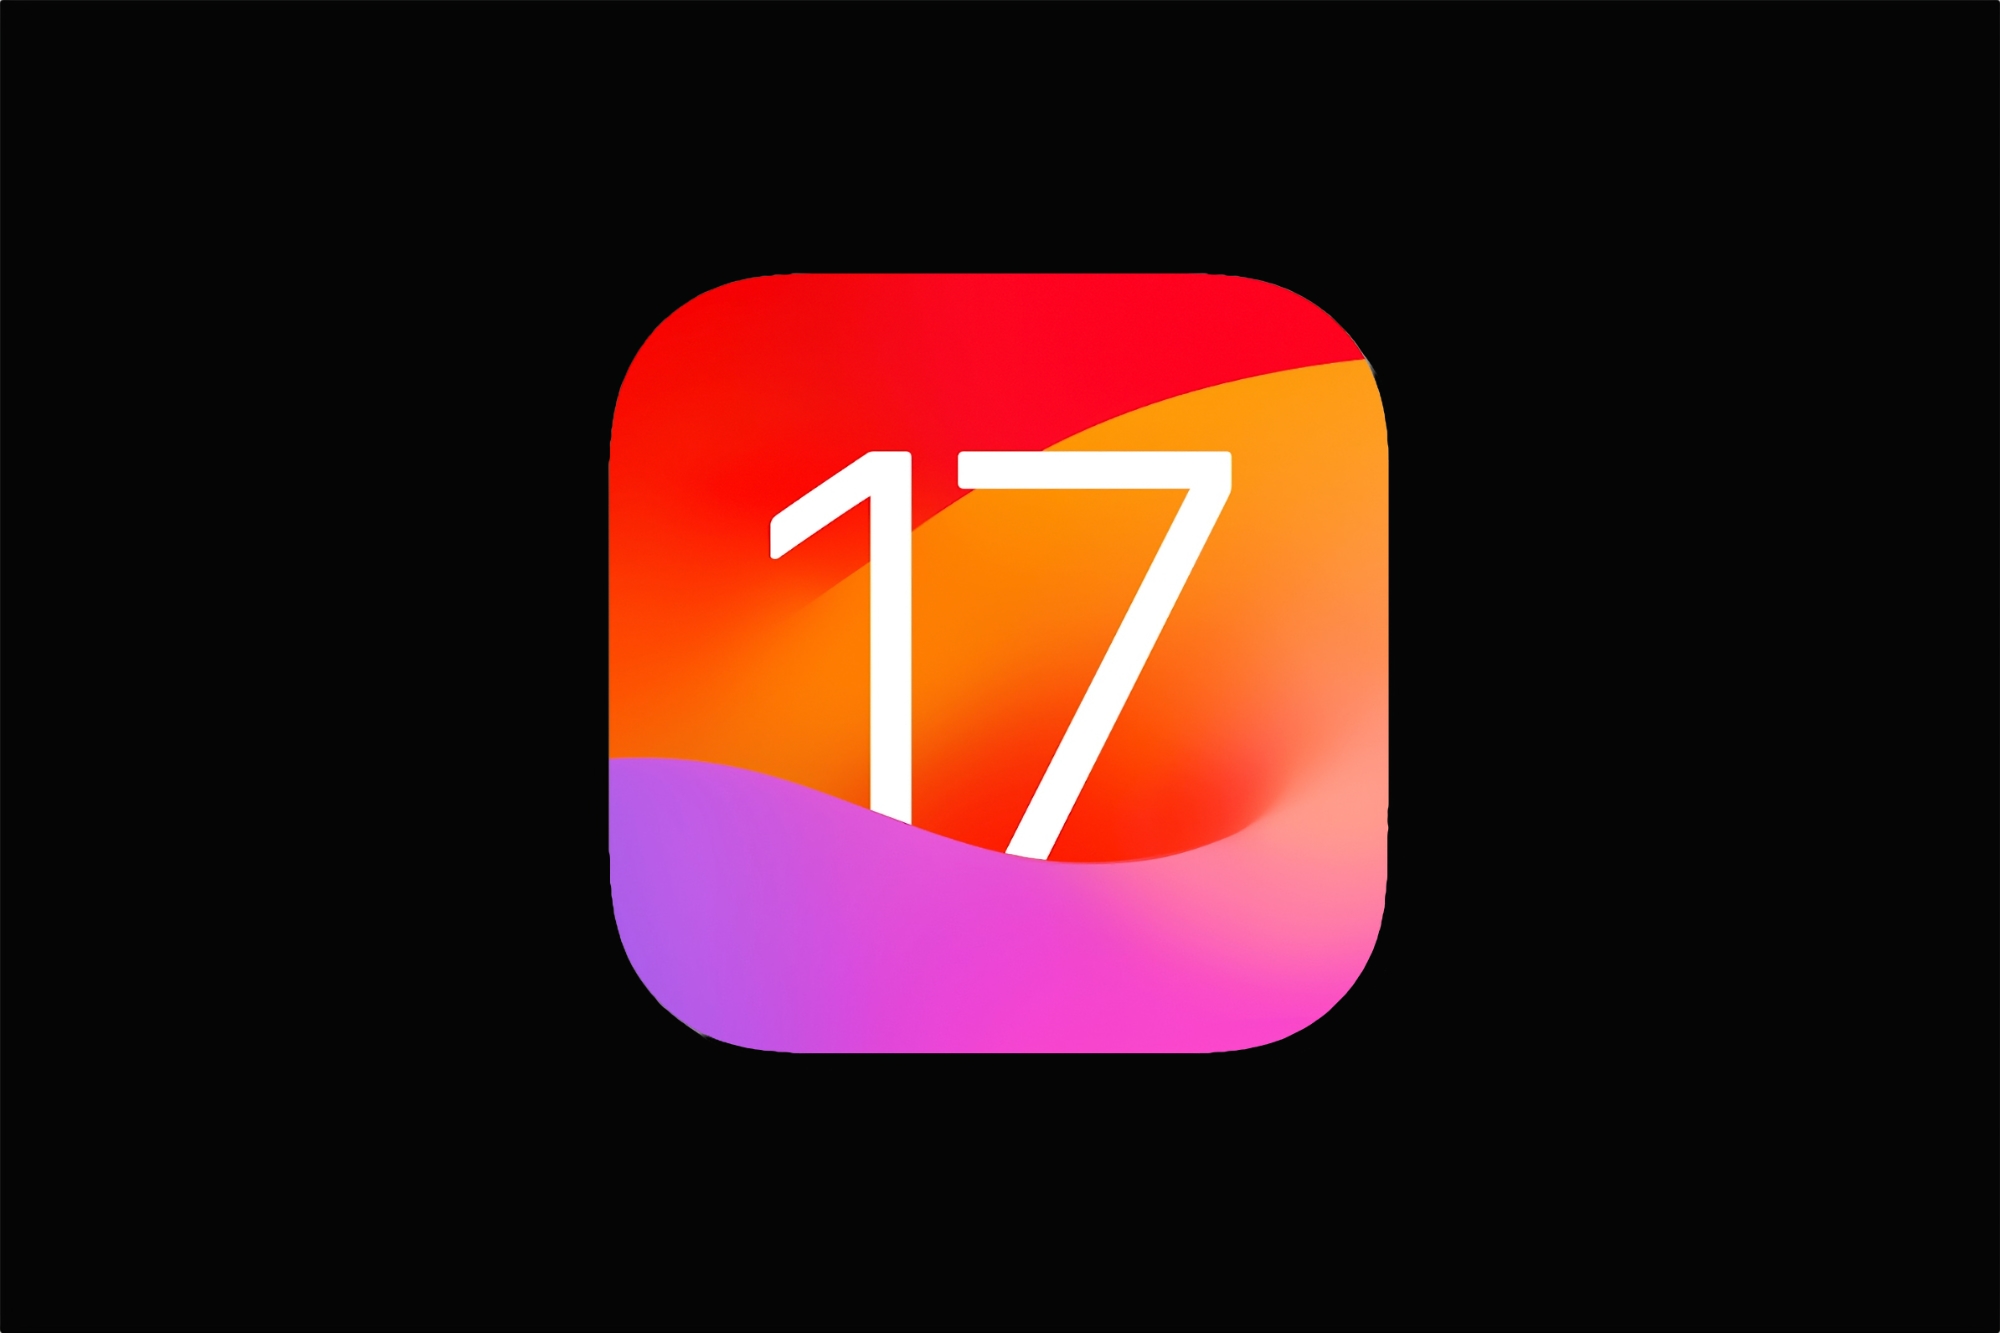 Apple brengt eerste bètaversies uit van iOS 17 en iPadOS 17